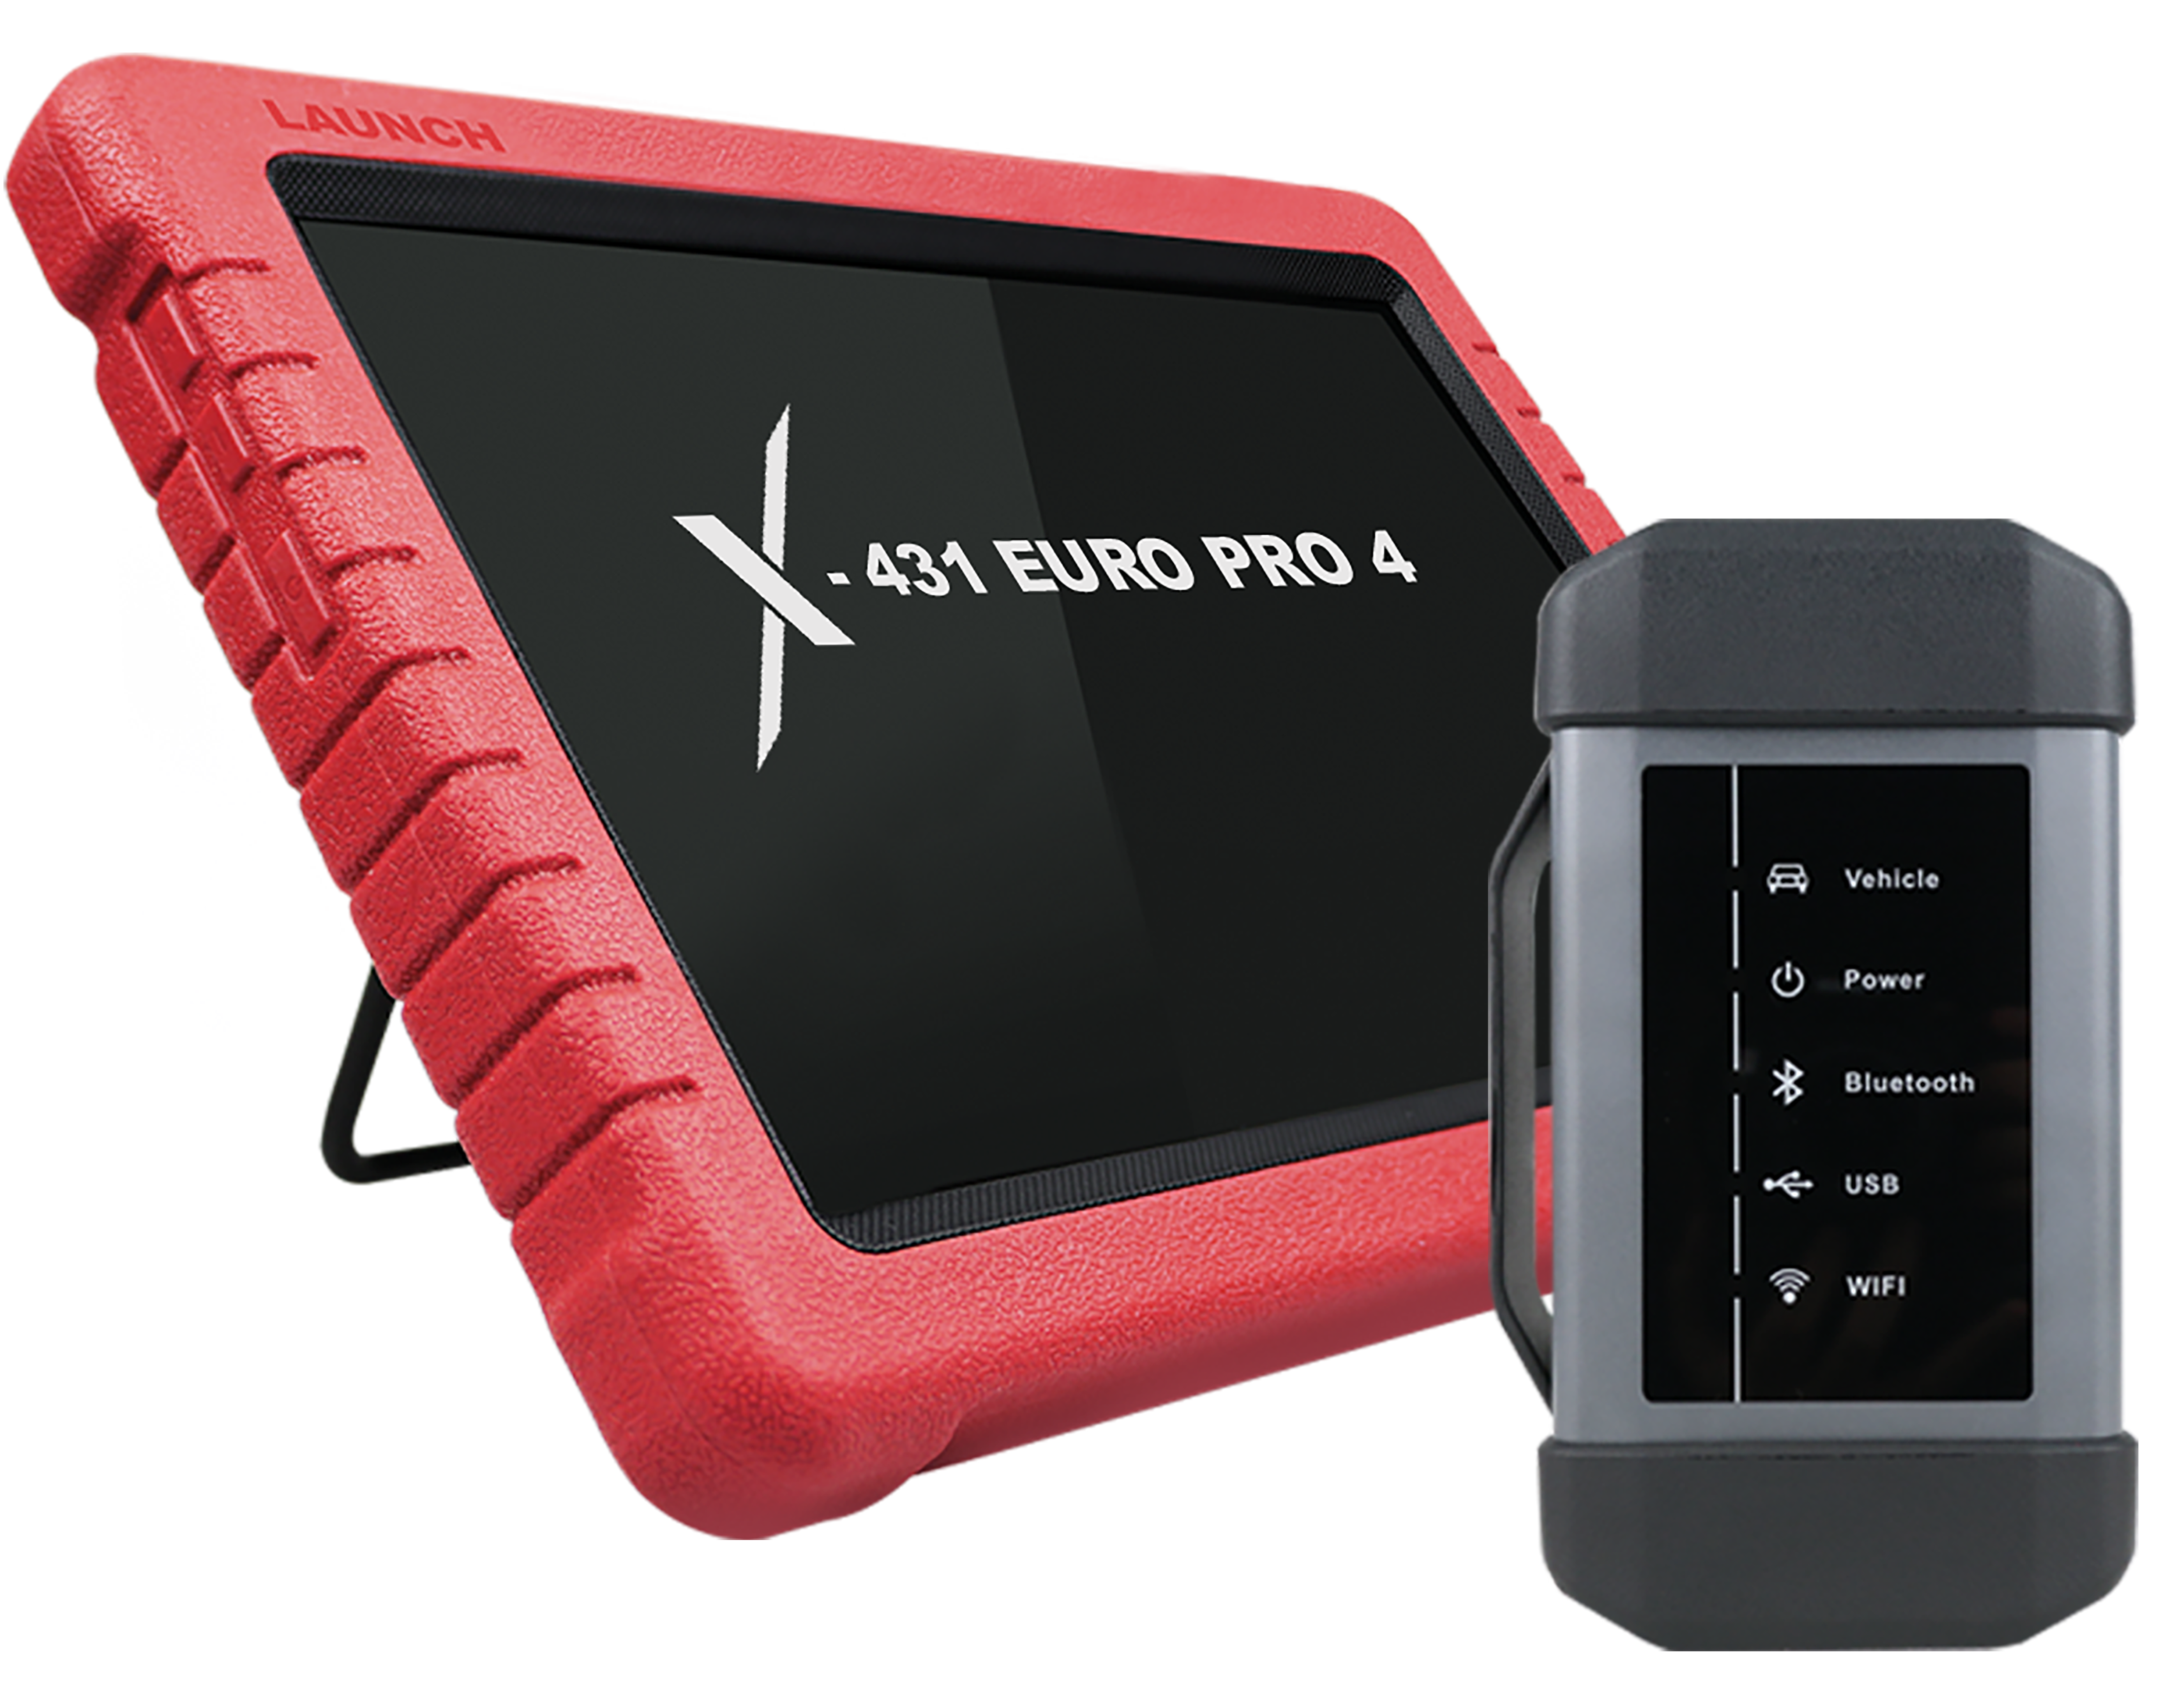 LAUNCH X-431 EURO PRO HD Diagnostic Device